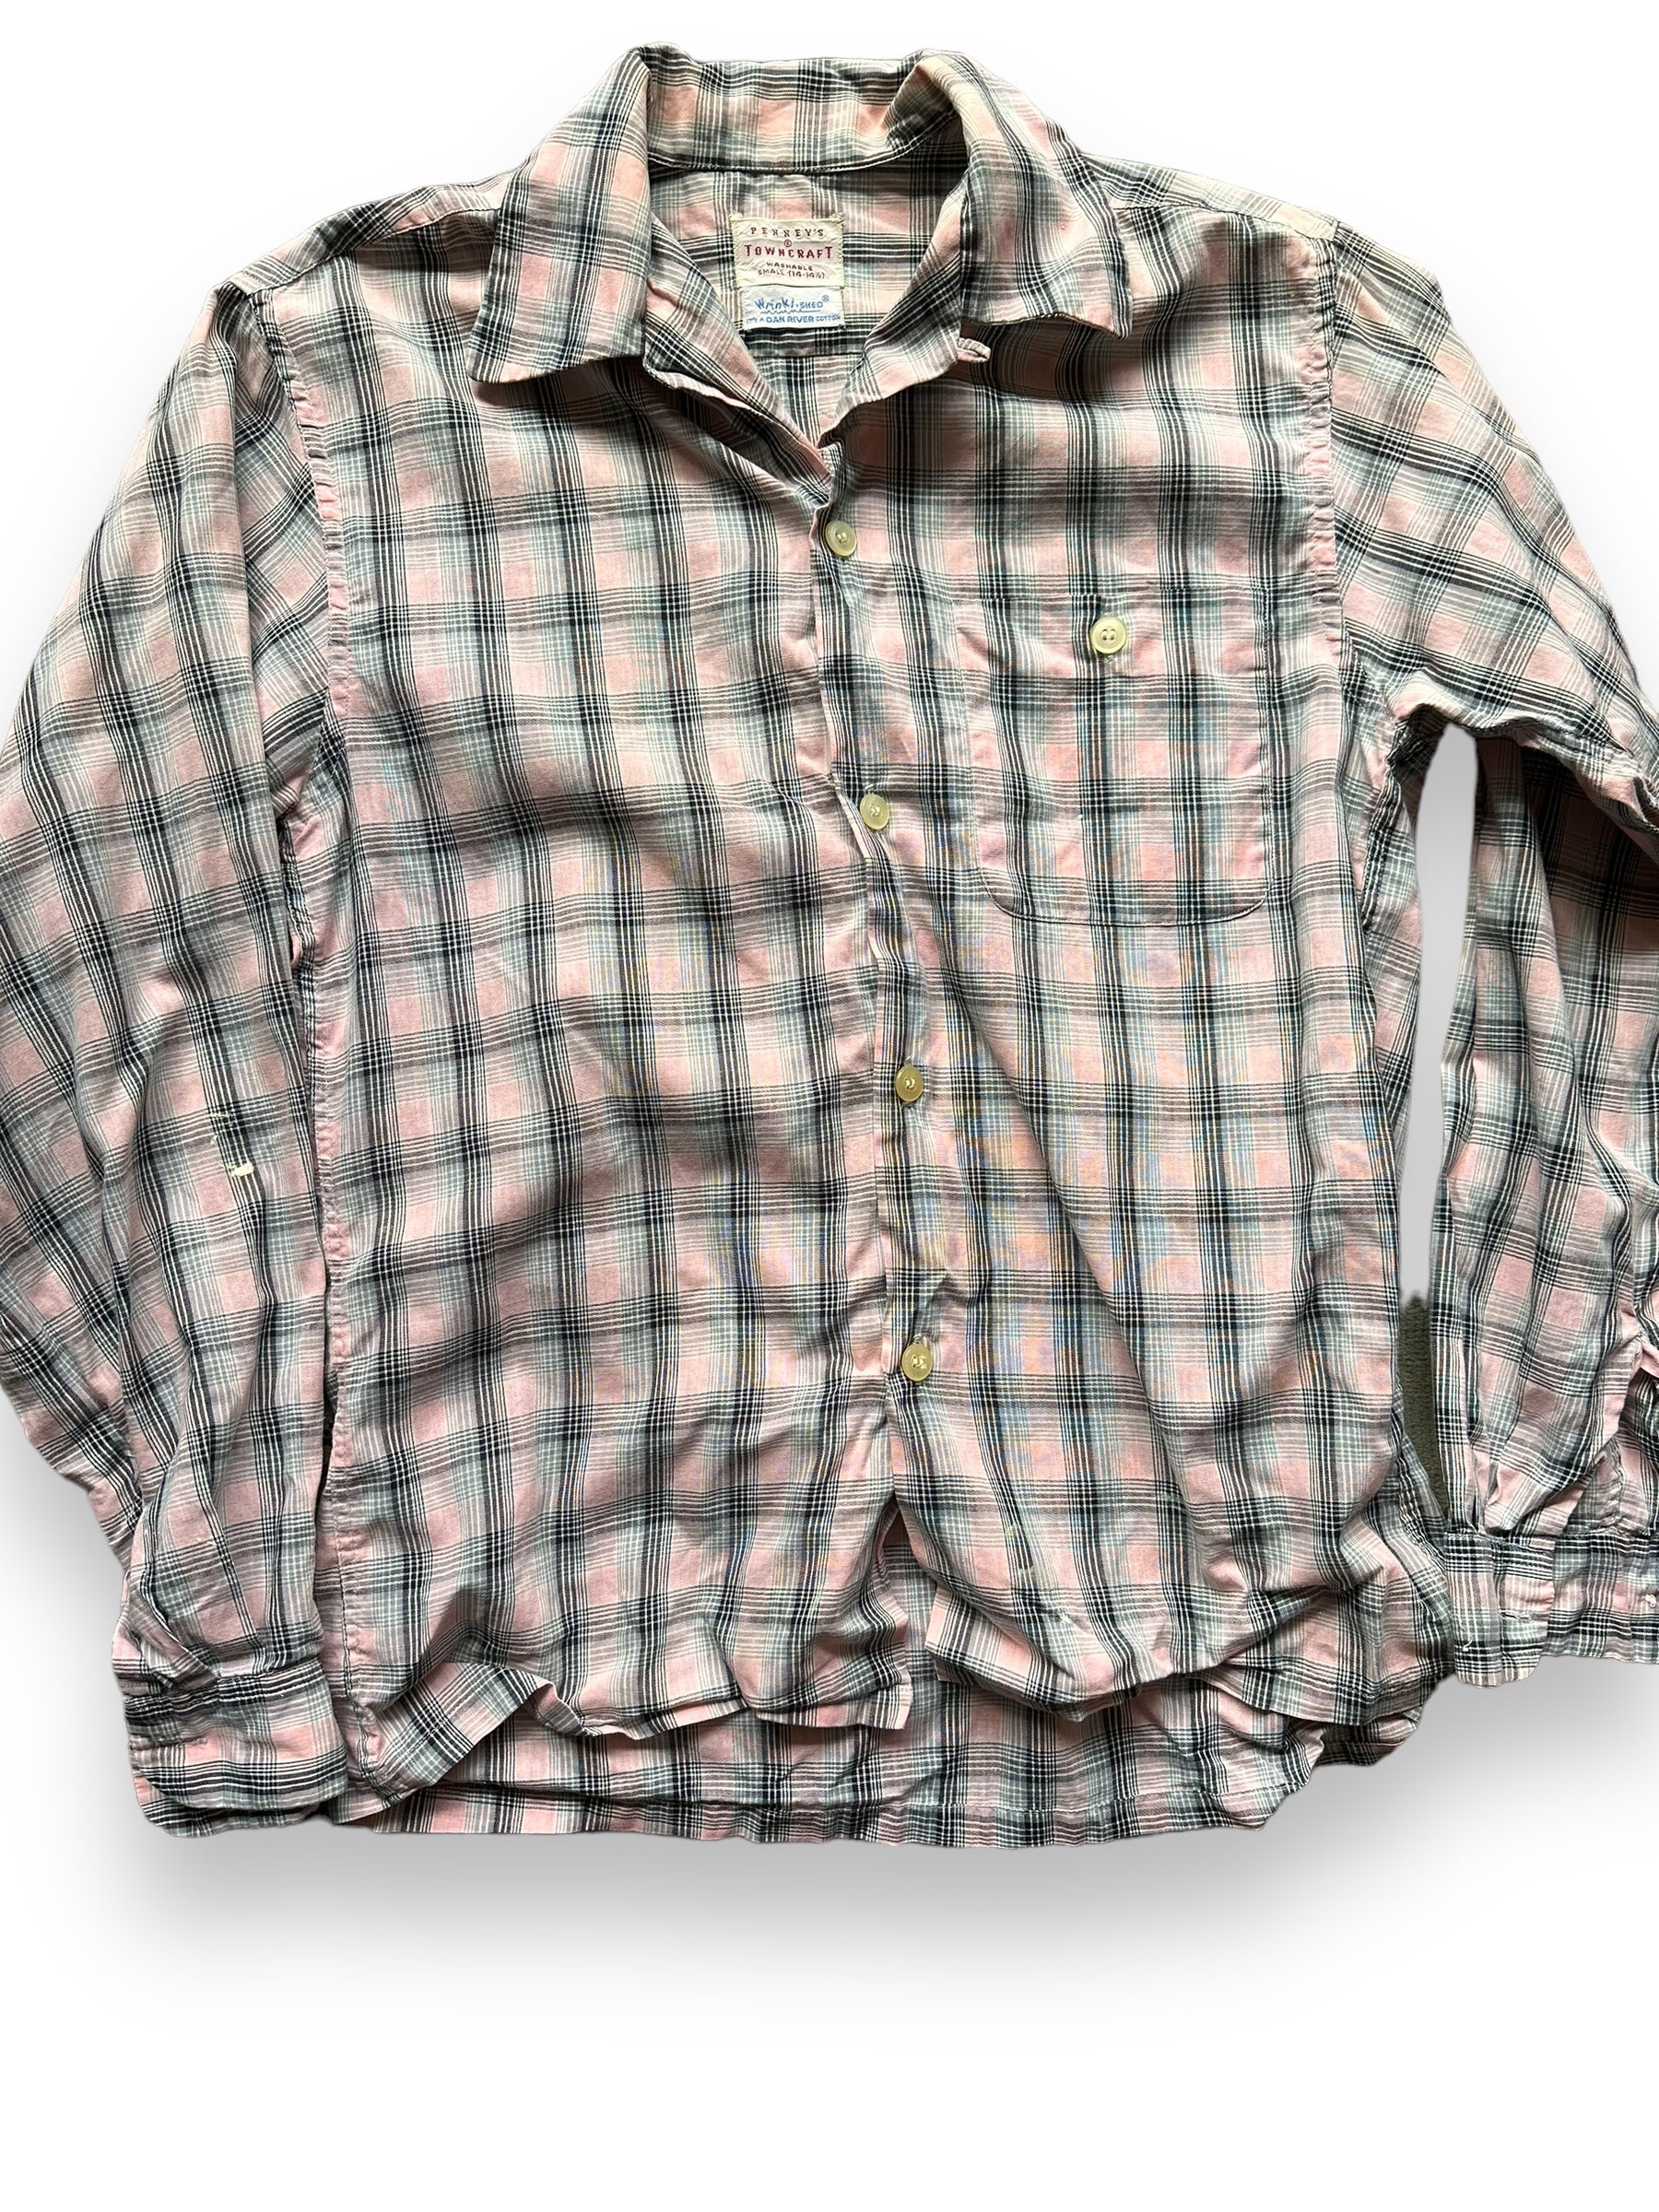 Front Detail of Vintage Penney's Towncraft Wrinkl-Shed Shirt SZ S | Vintage Rockabilly Shirt Seattle | Barn Owl Vintage Seattle